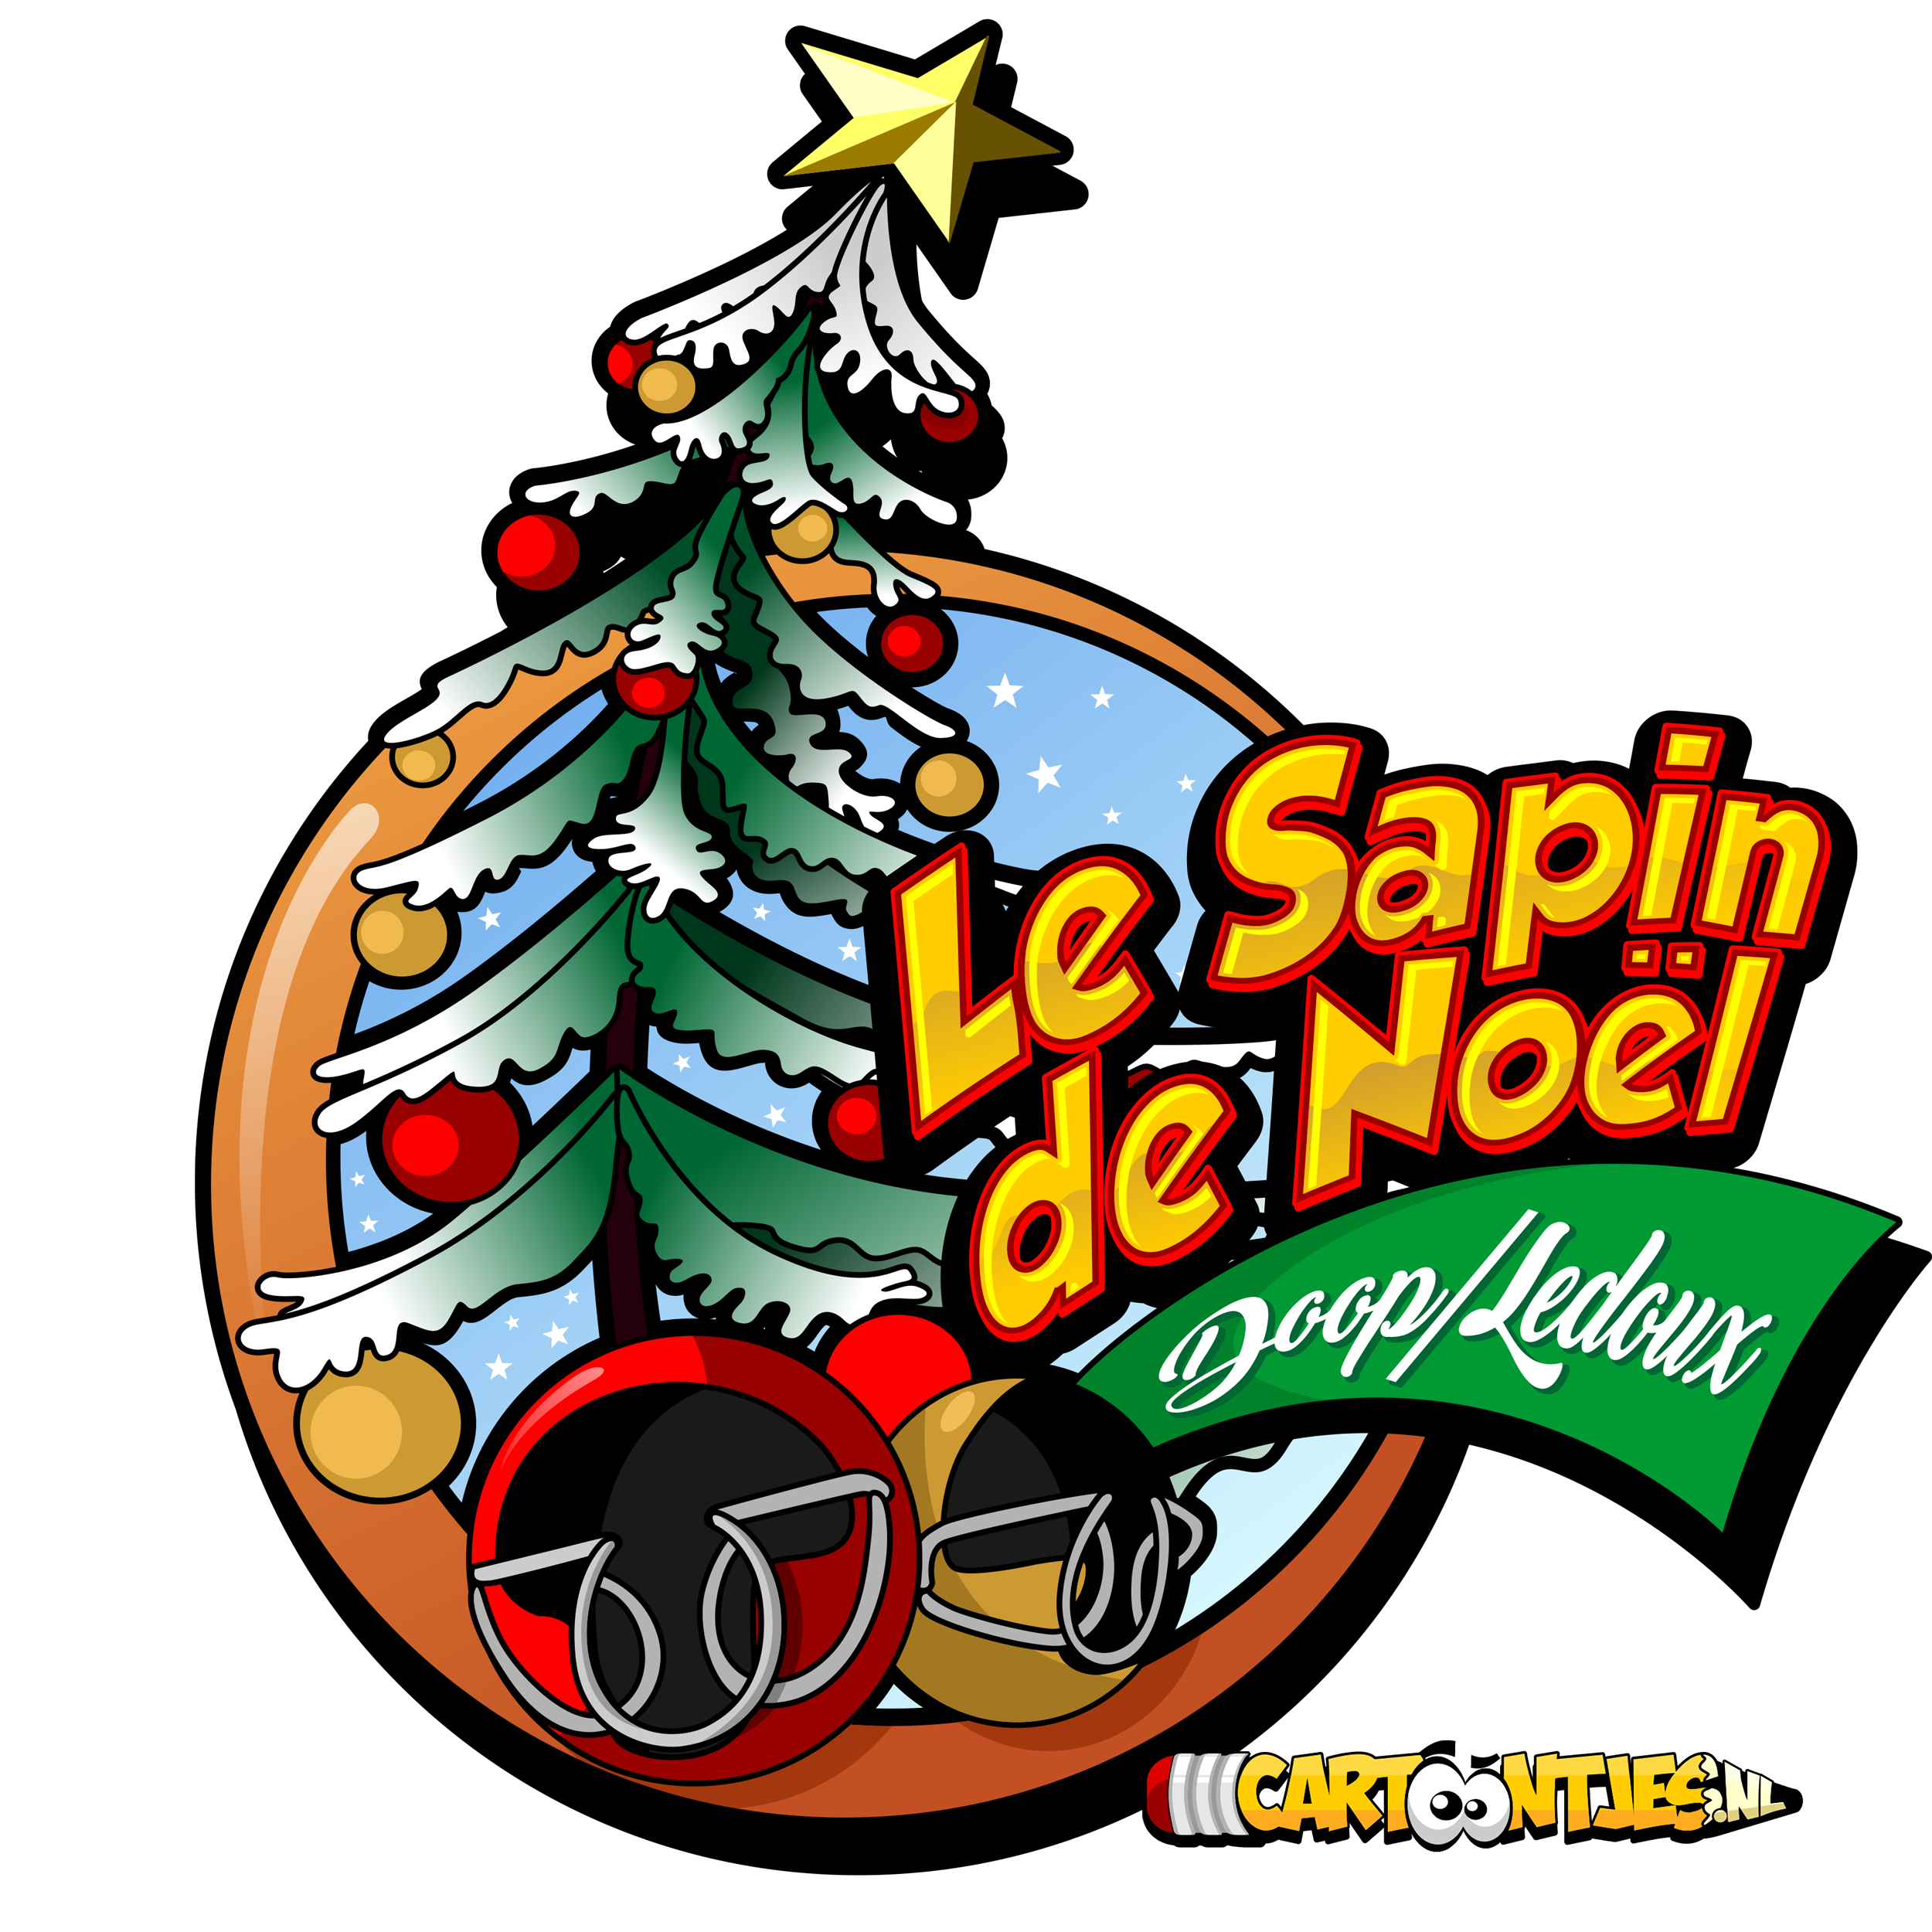 Le Sapin de Noel kermis logo